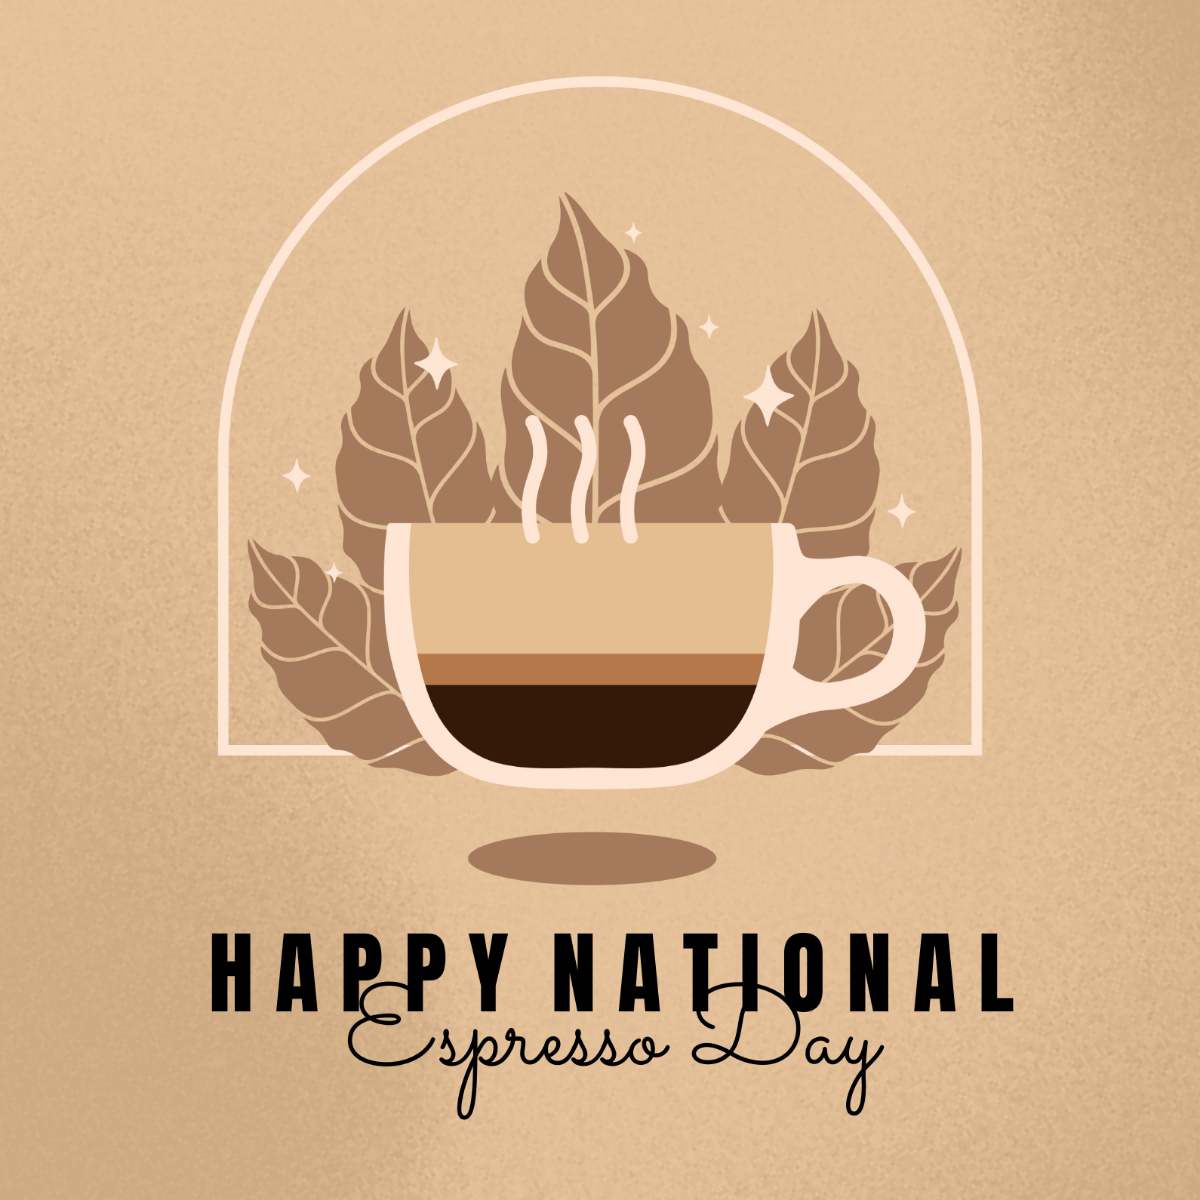 National Espresso Day LinkedIn Post Template